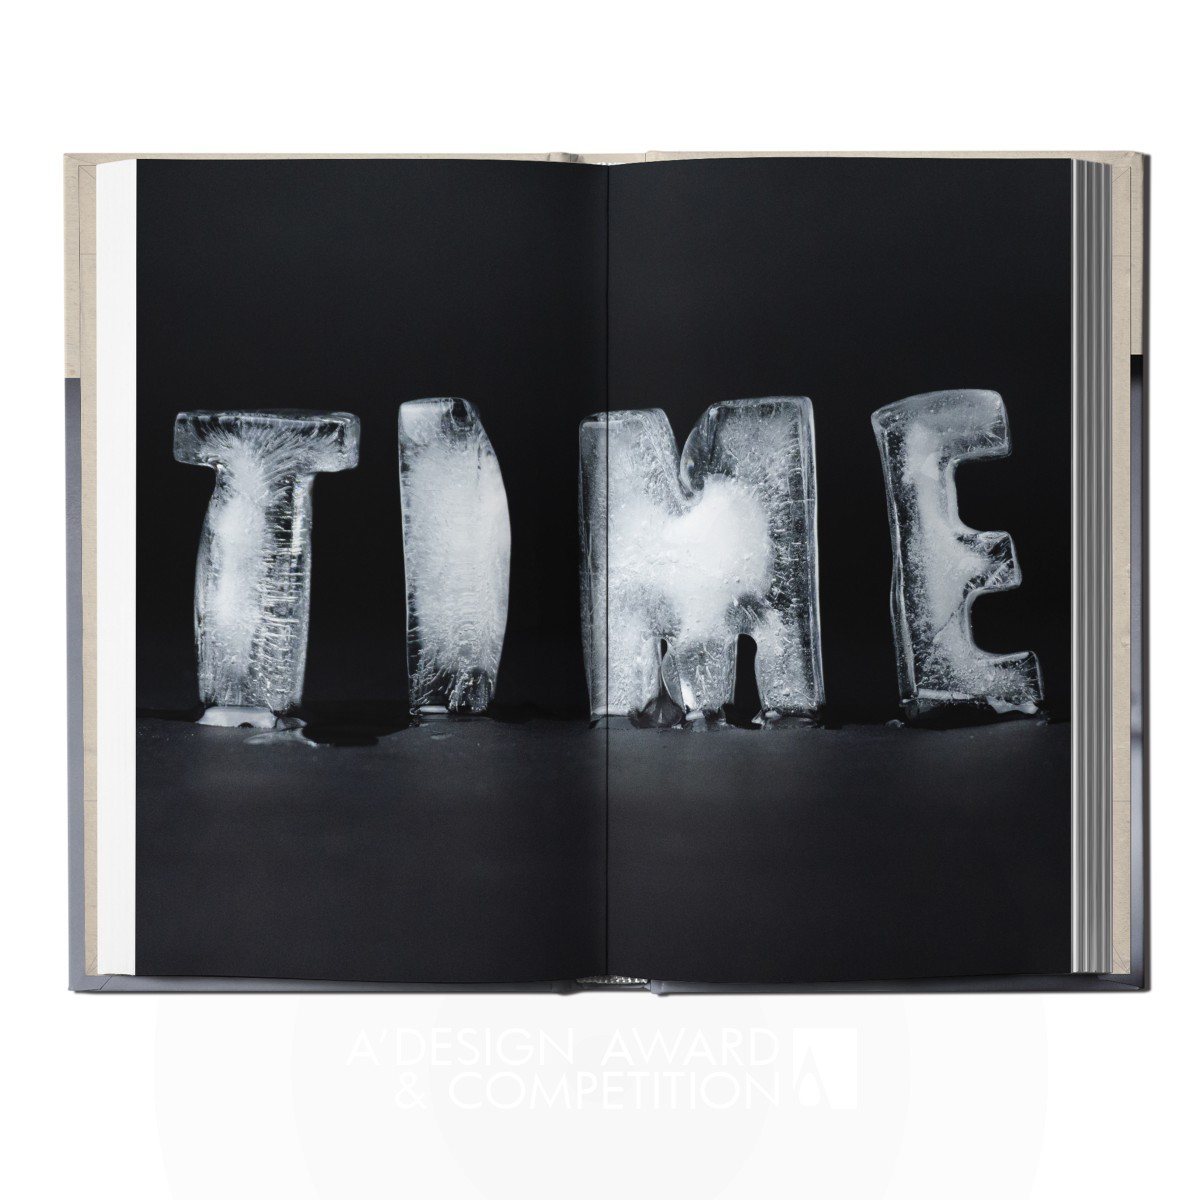 Discussing Time Book by Zona Yuechen Guan